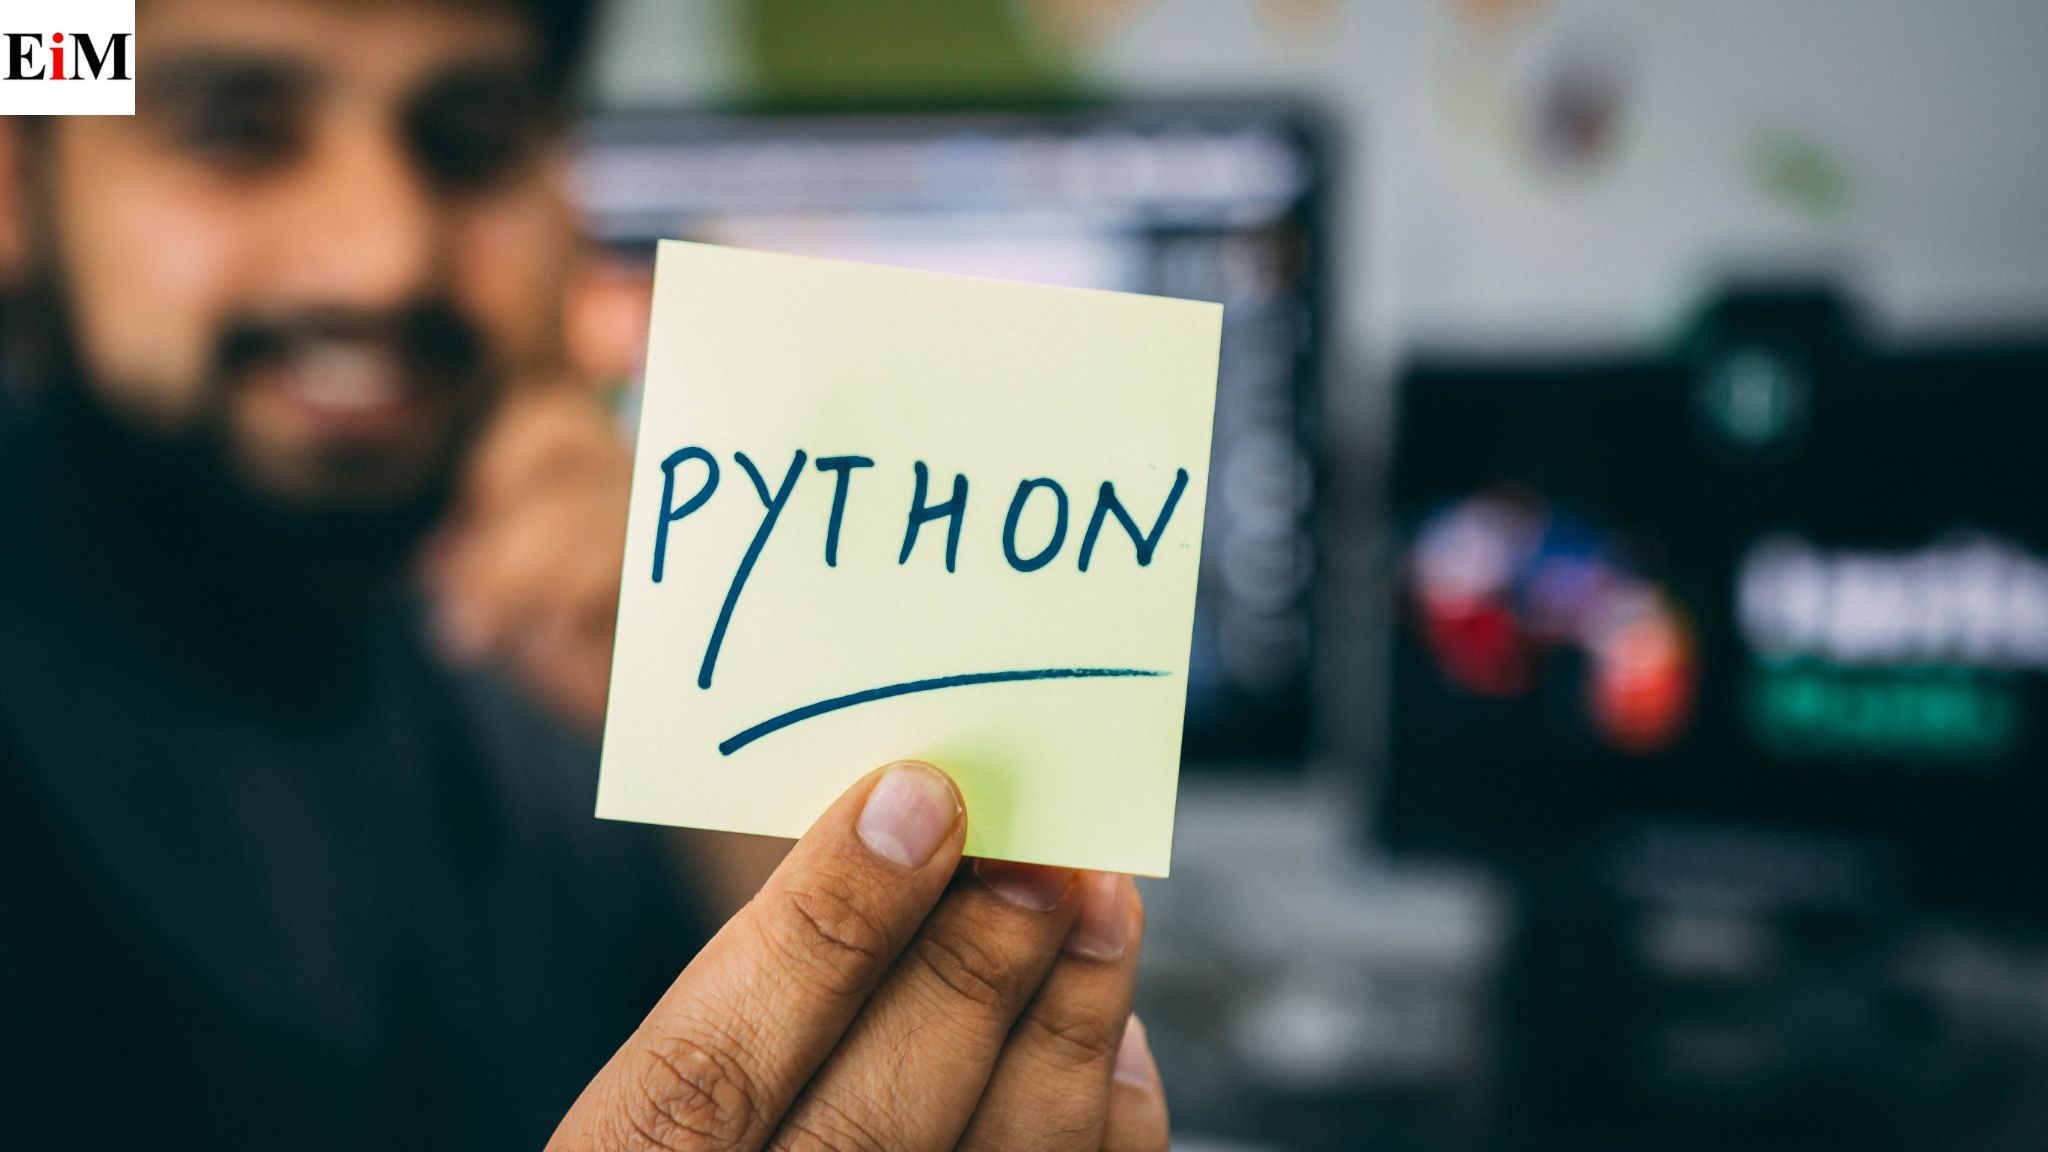 Python Overtakes JavaScript and C++ in Programming Language Rankings